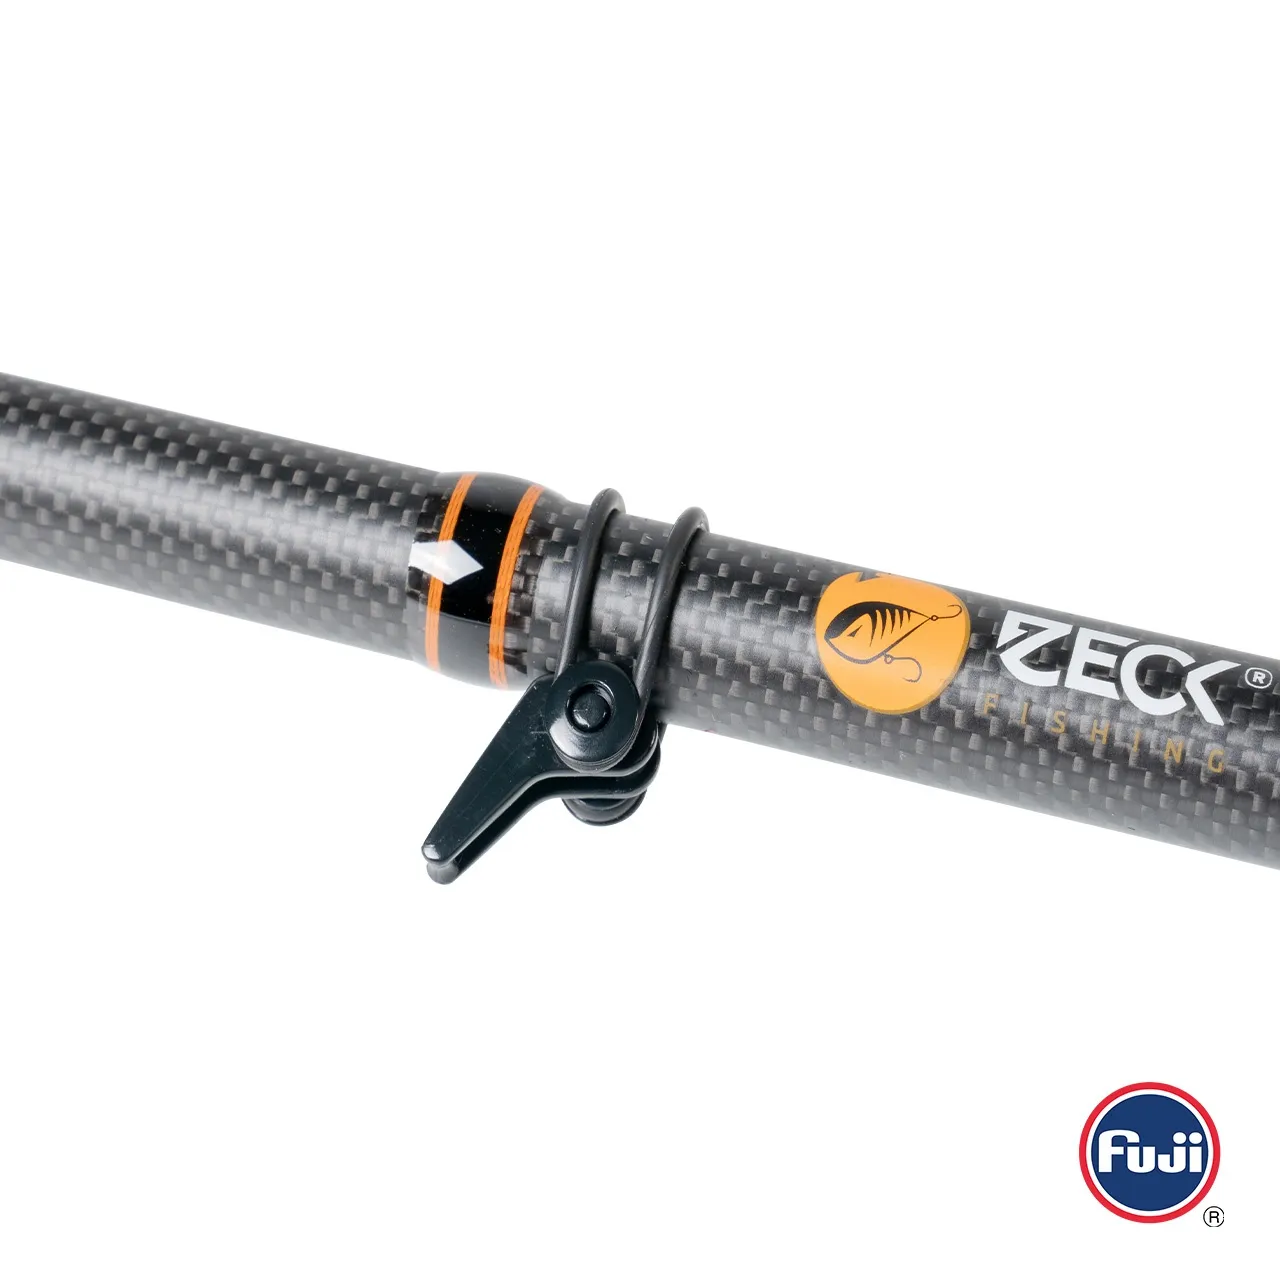 Zeck-Fishing Jigsaw 240cm / 40g Spinning varaličarski štap za ribolov predatora - Mozaik Centar PREDATORY FISH serija